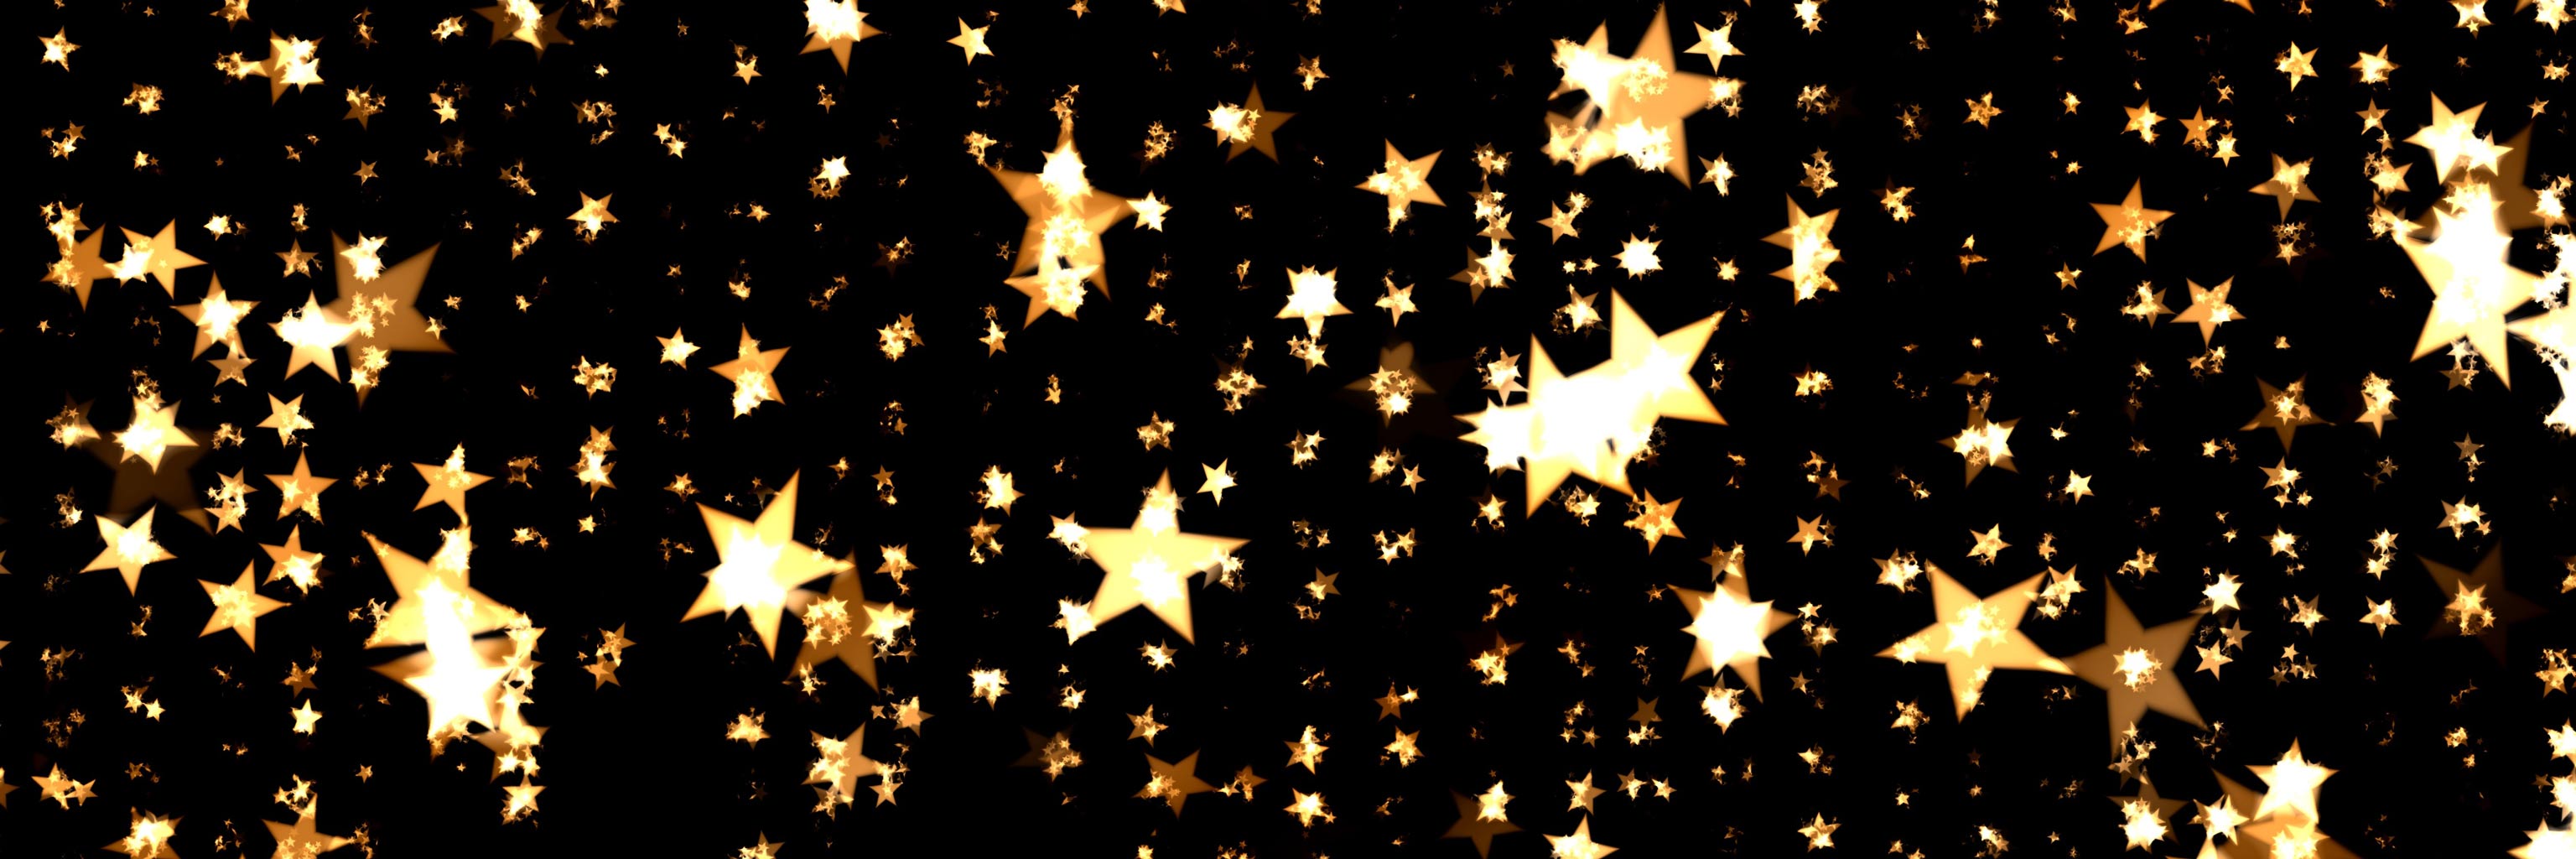 Many golden stars of various sizes